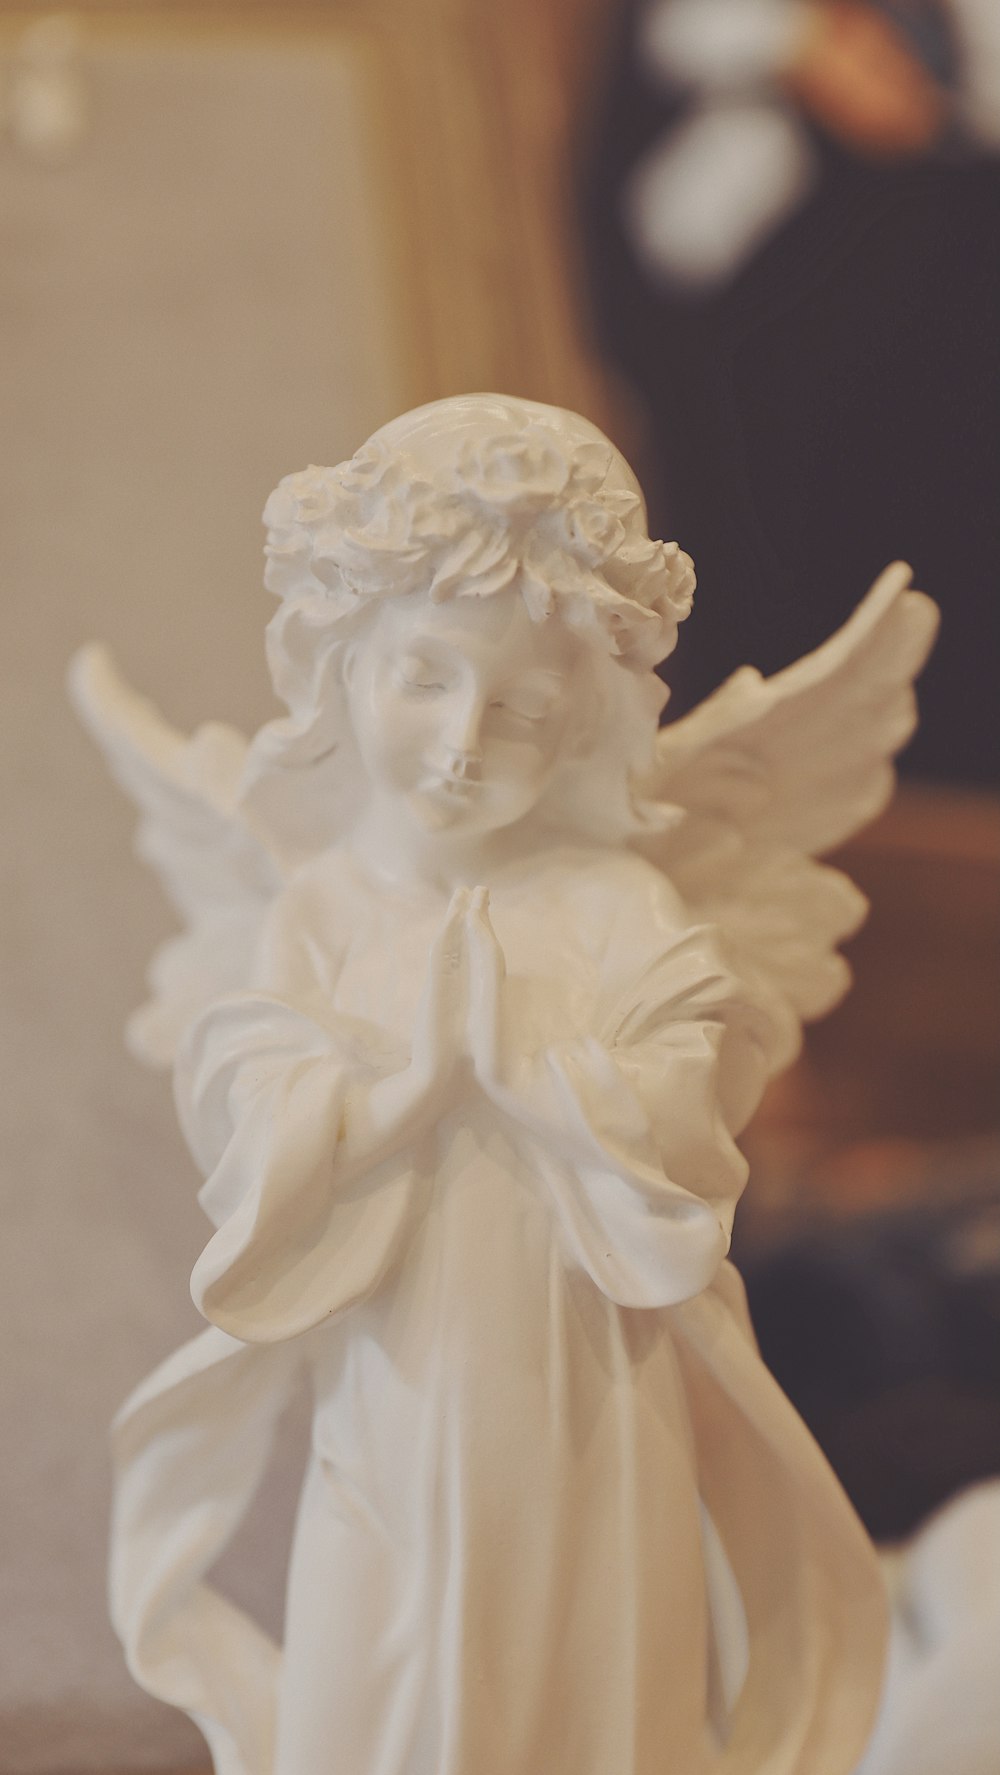 white angel ceramic figurine on black surface